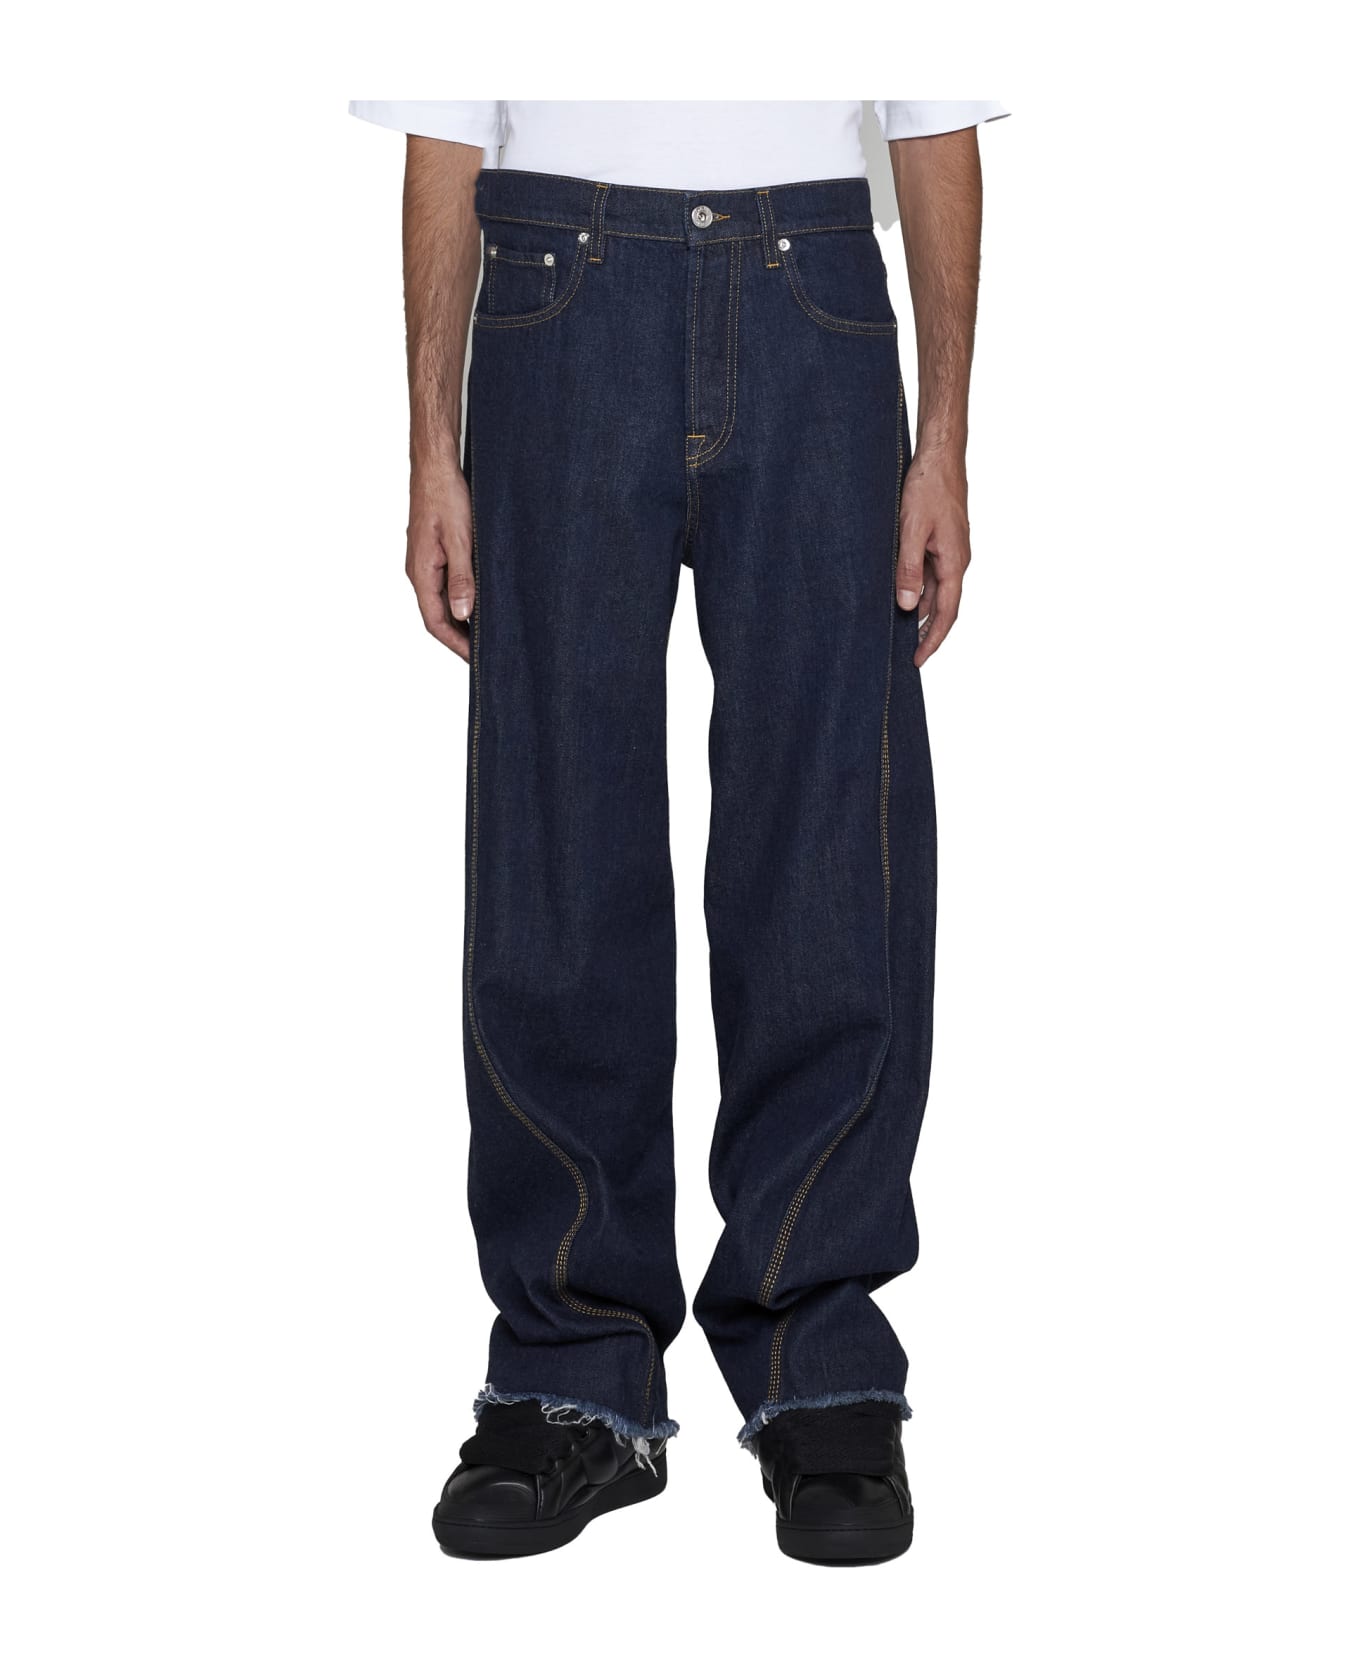 Lanvin Twisted Denim Jeans - NAVYBLUE